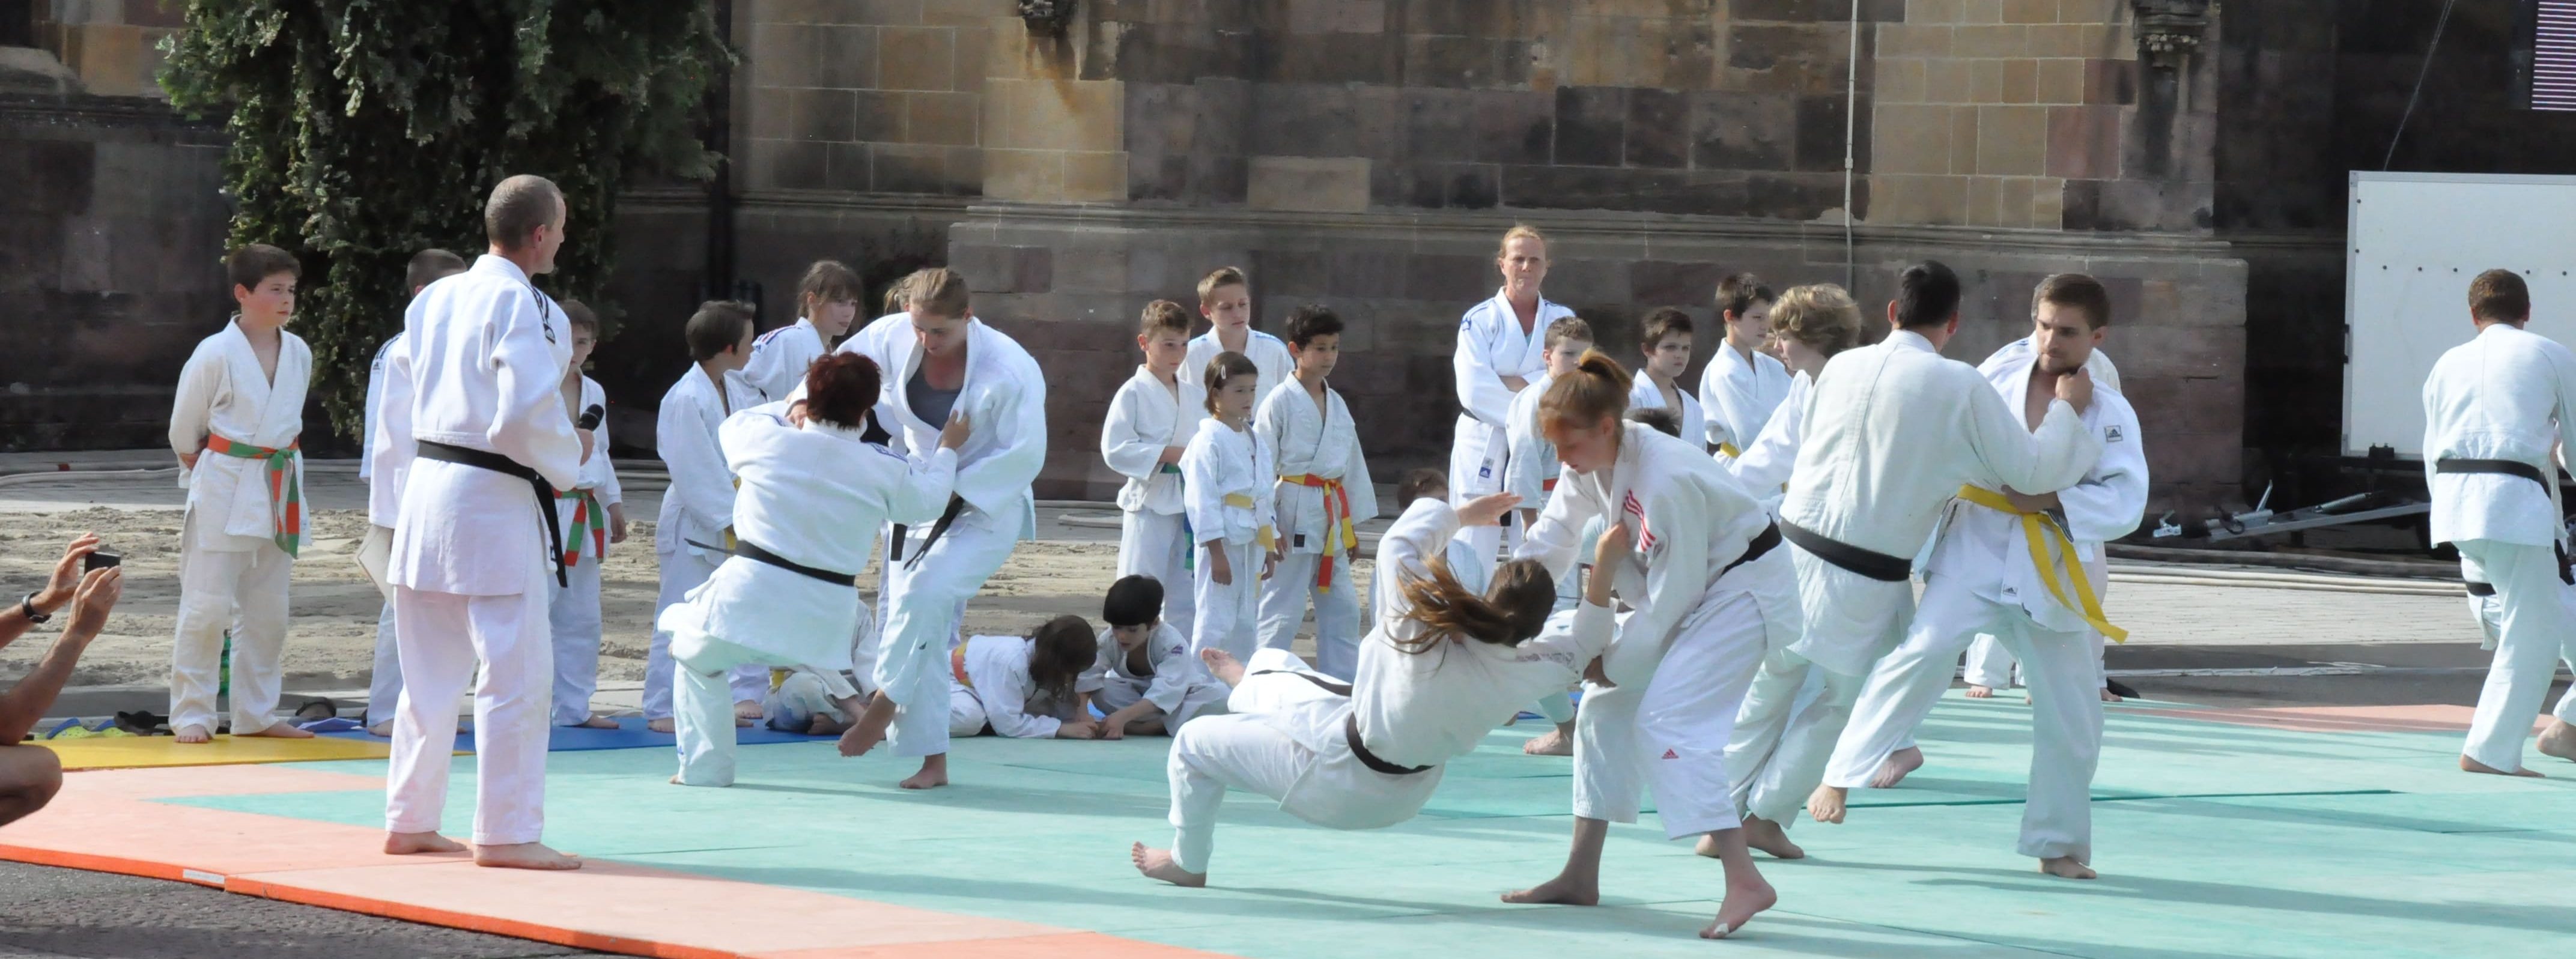 Demonstration de judo